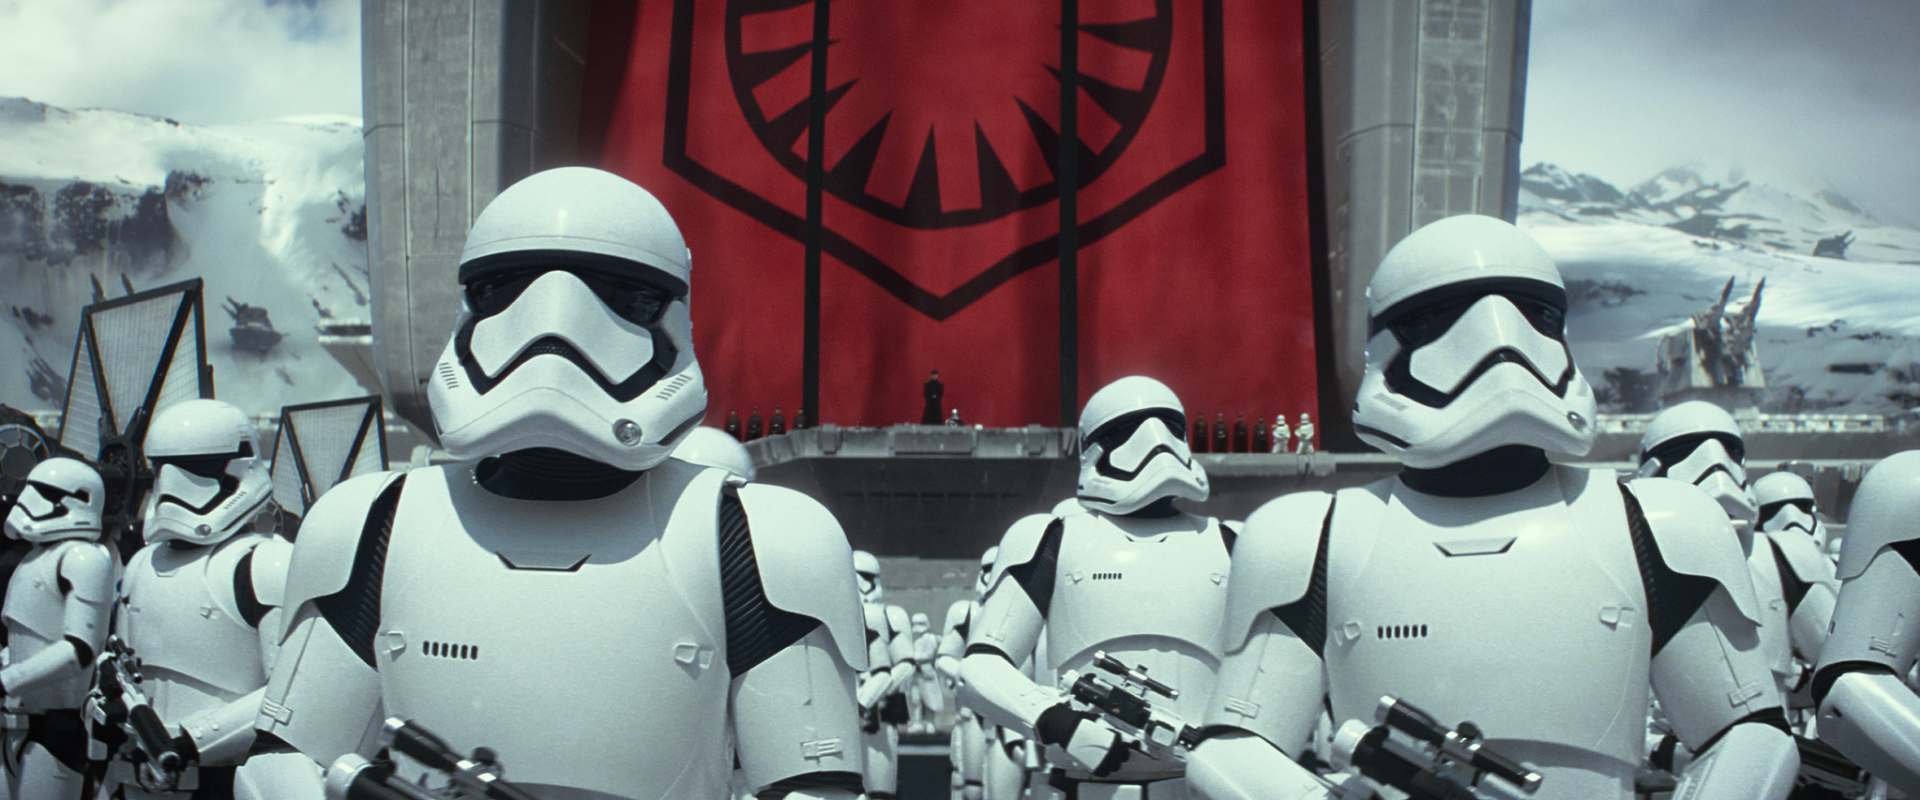 Star Wars: Episode VII - The Force Awakens background 2